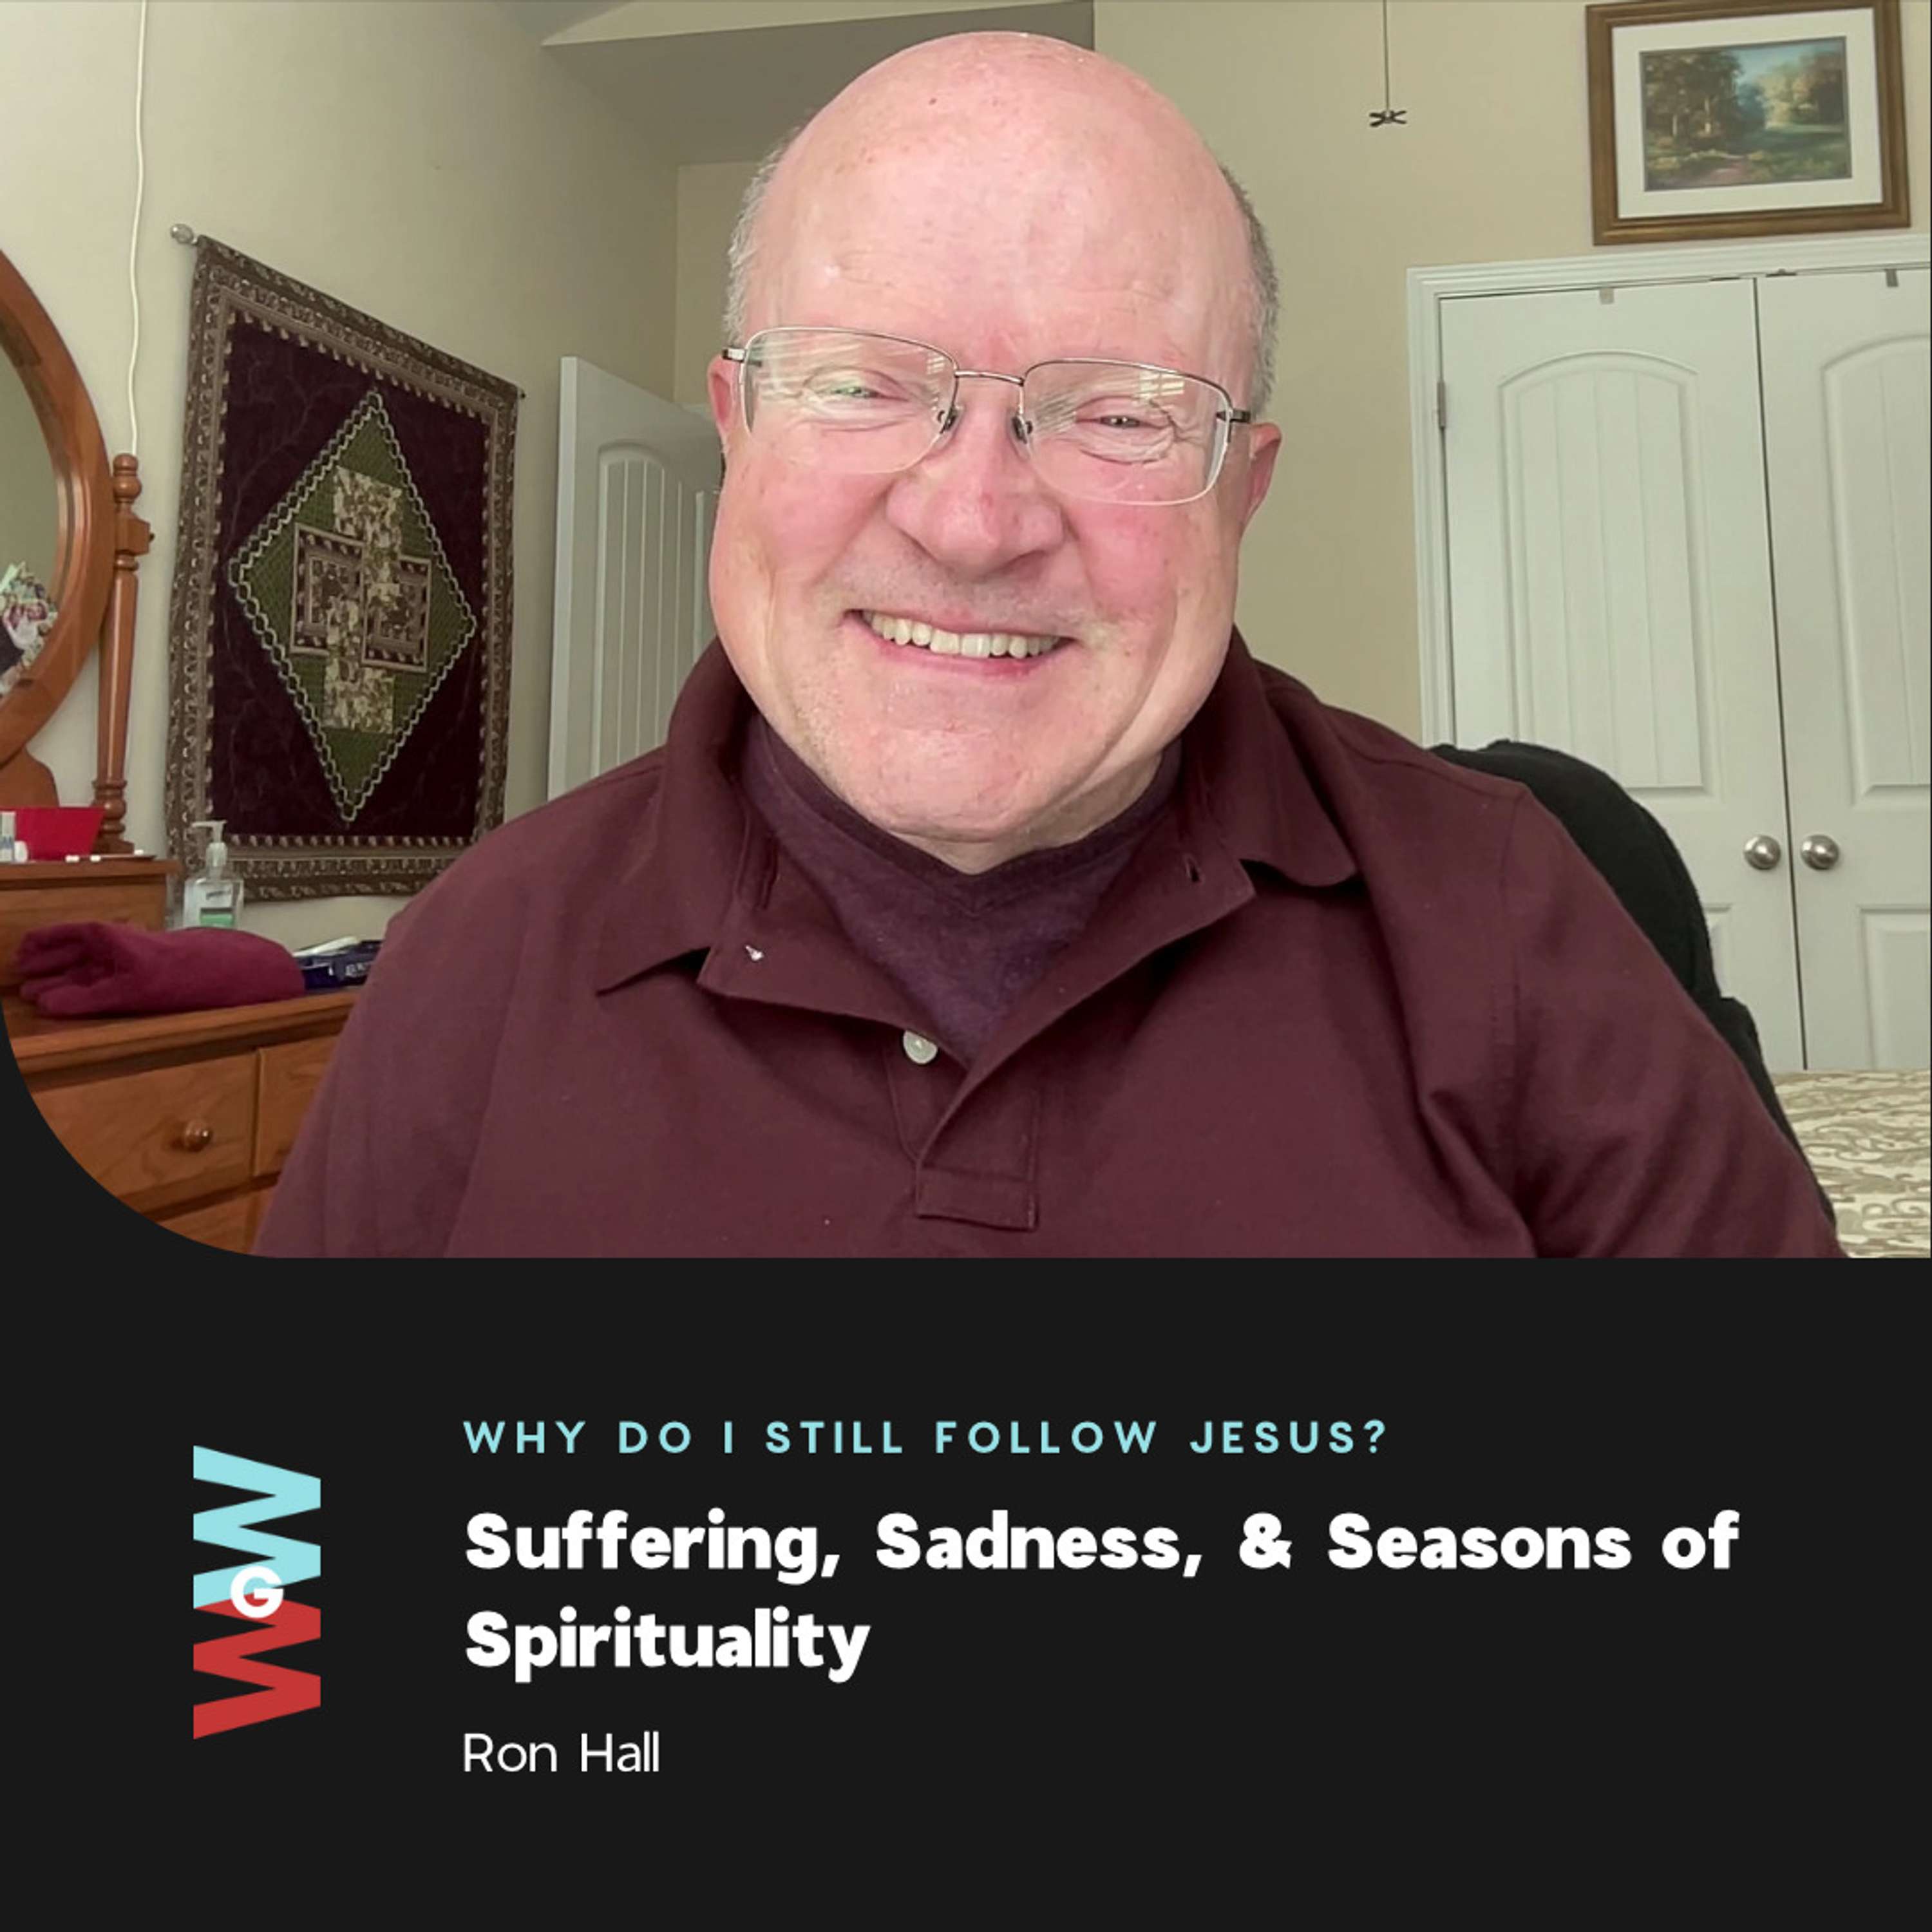 Ron Hall - Why Do I Still Follow Jesus? (Suffering, Sadness, & Seasons of Spirituality)